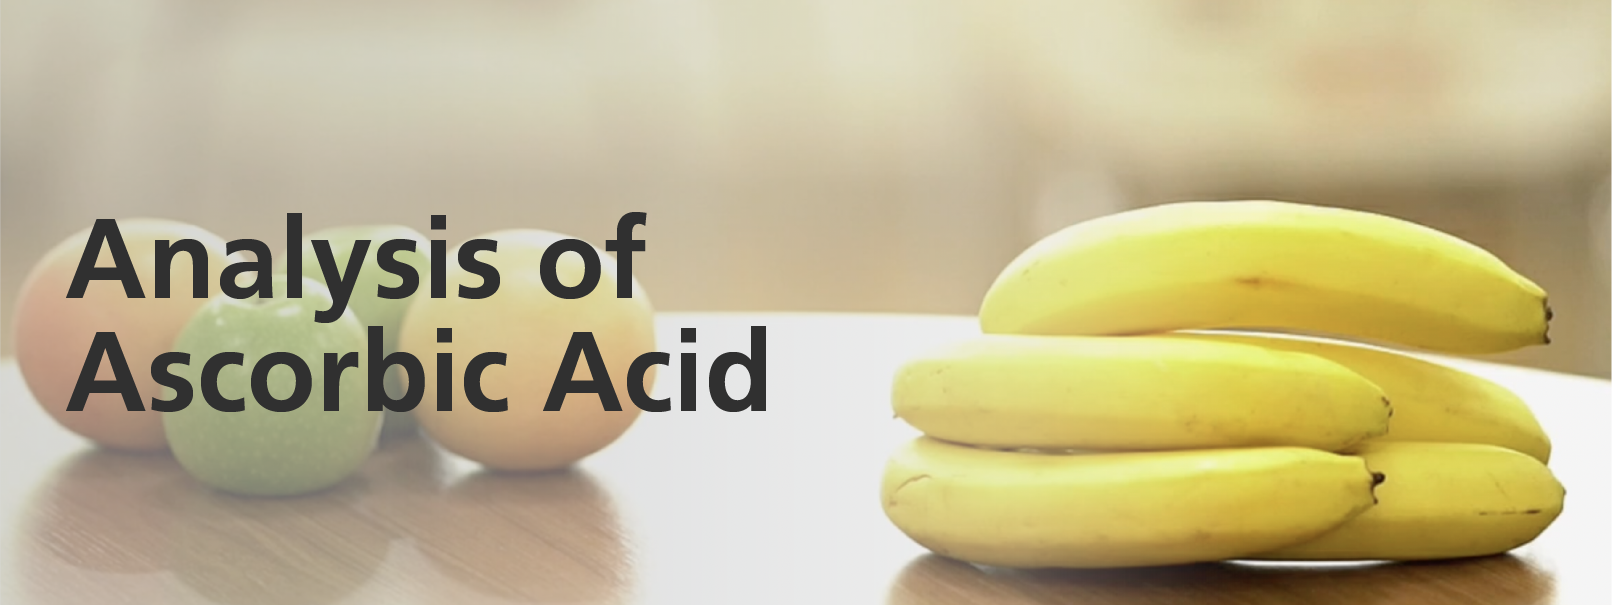 Analysis of Ascorbic Acid